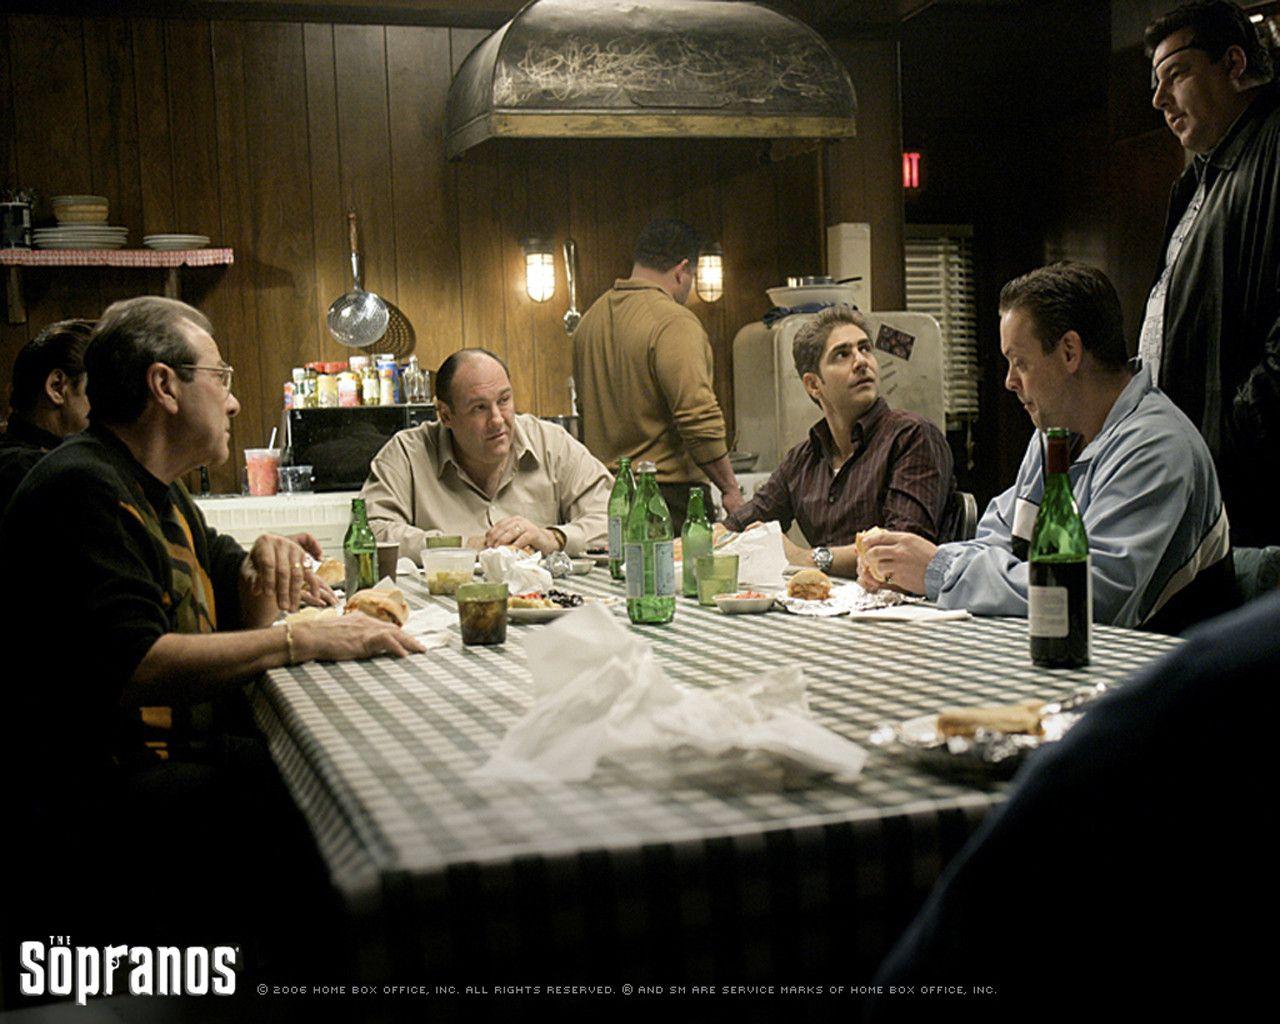 The Sopranos new Windows background Movie Wallpaper